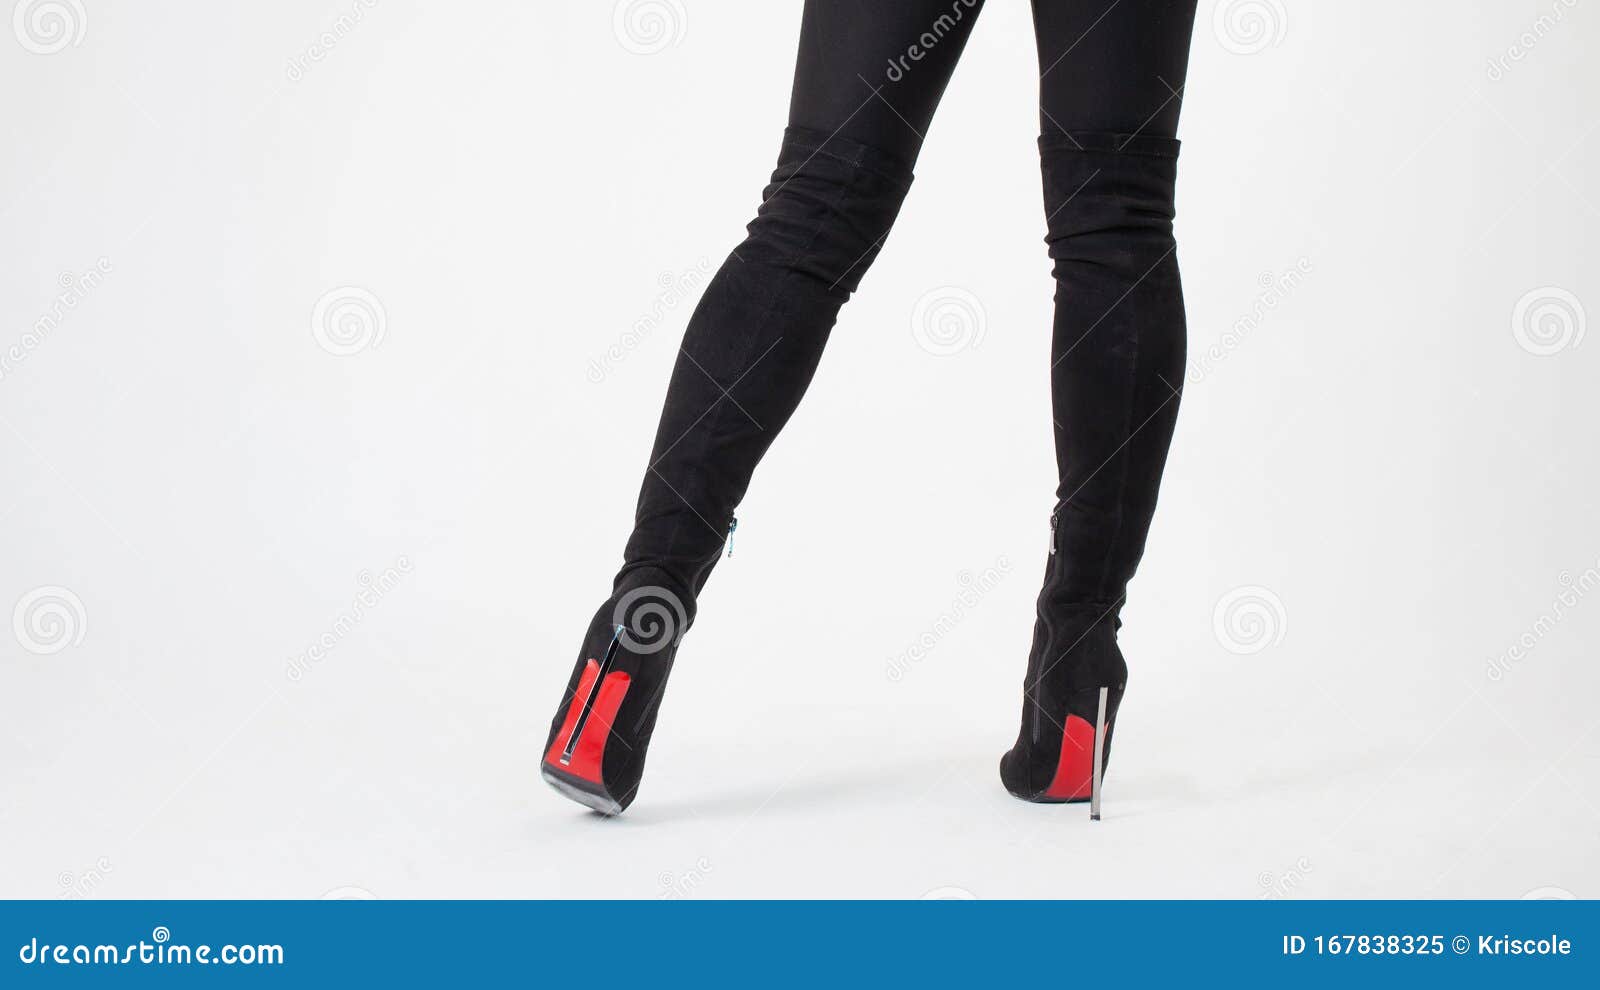 Slim Legs in Black Boots and Pants. Walking in High Heels Stock Image ...